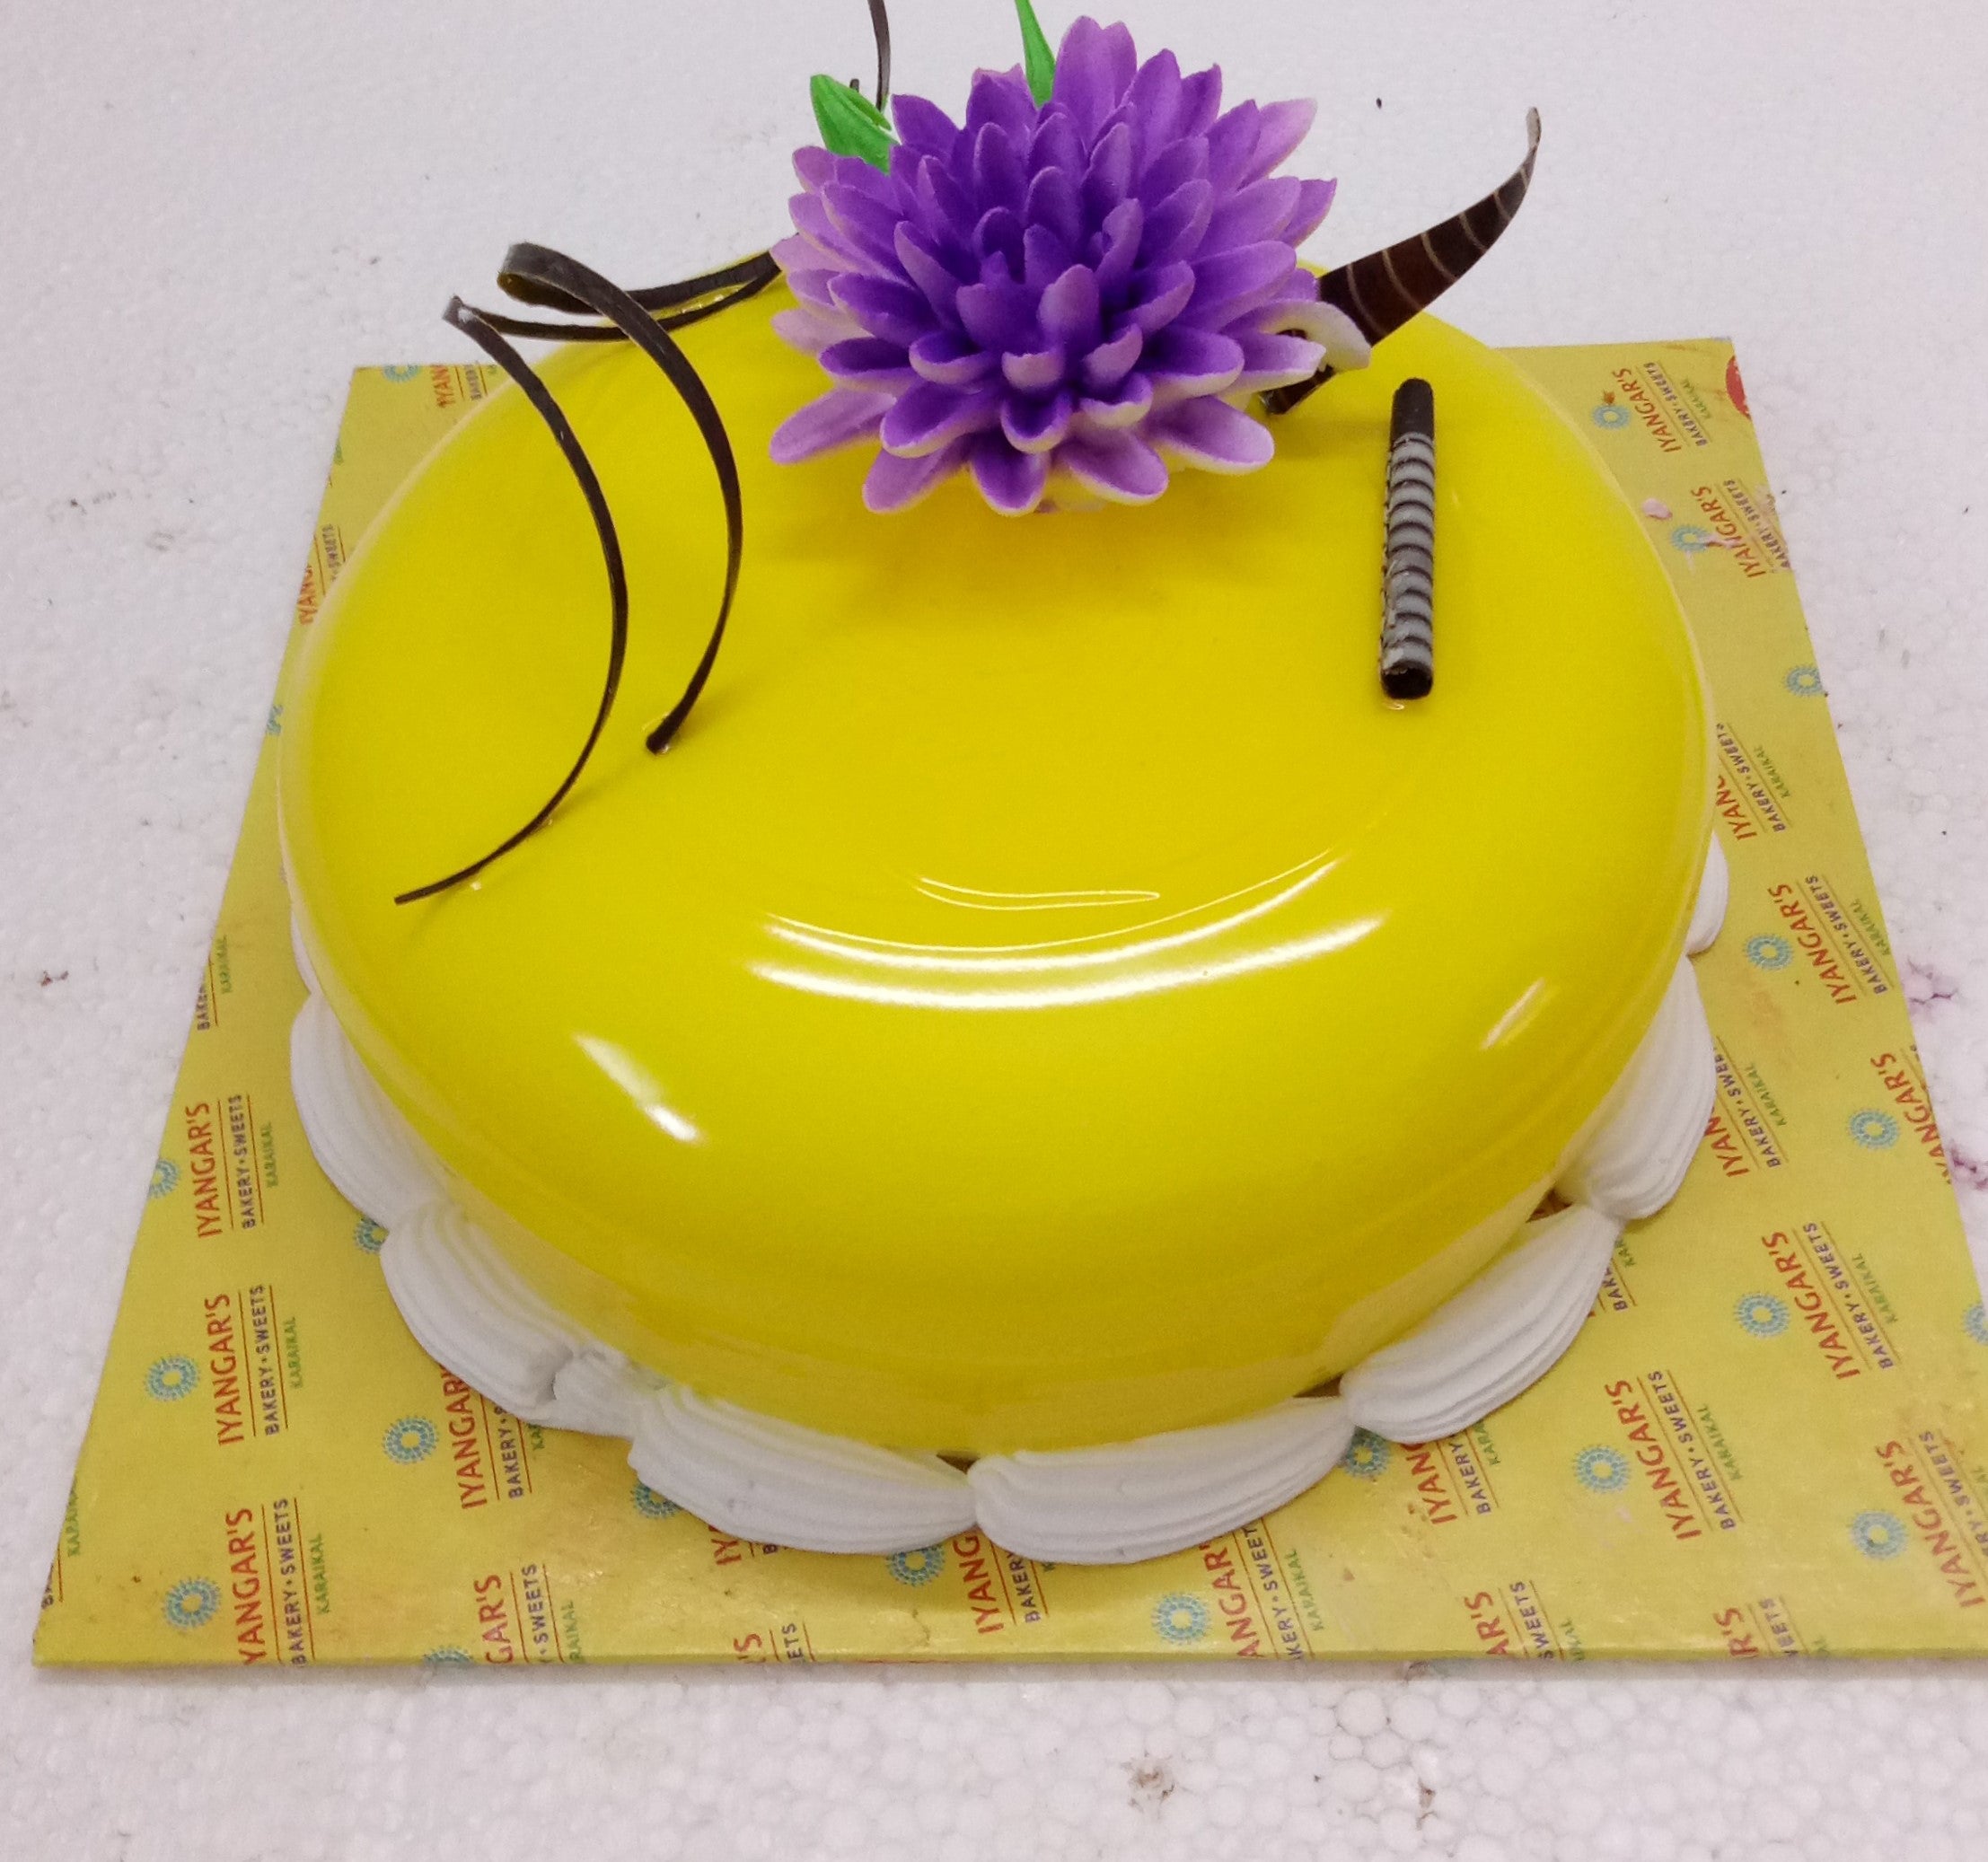 Tedibear couple pineapple glaze cake